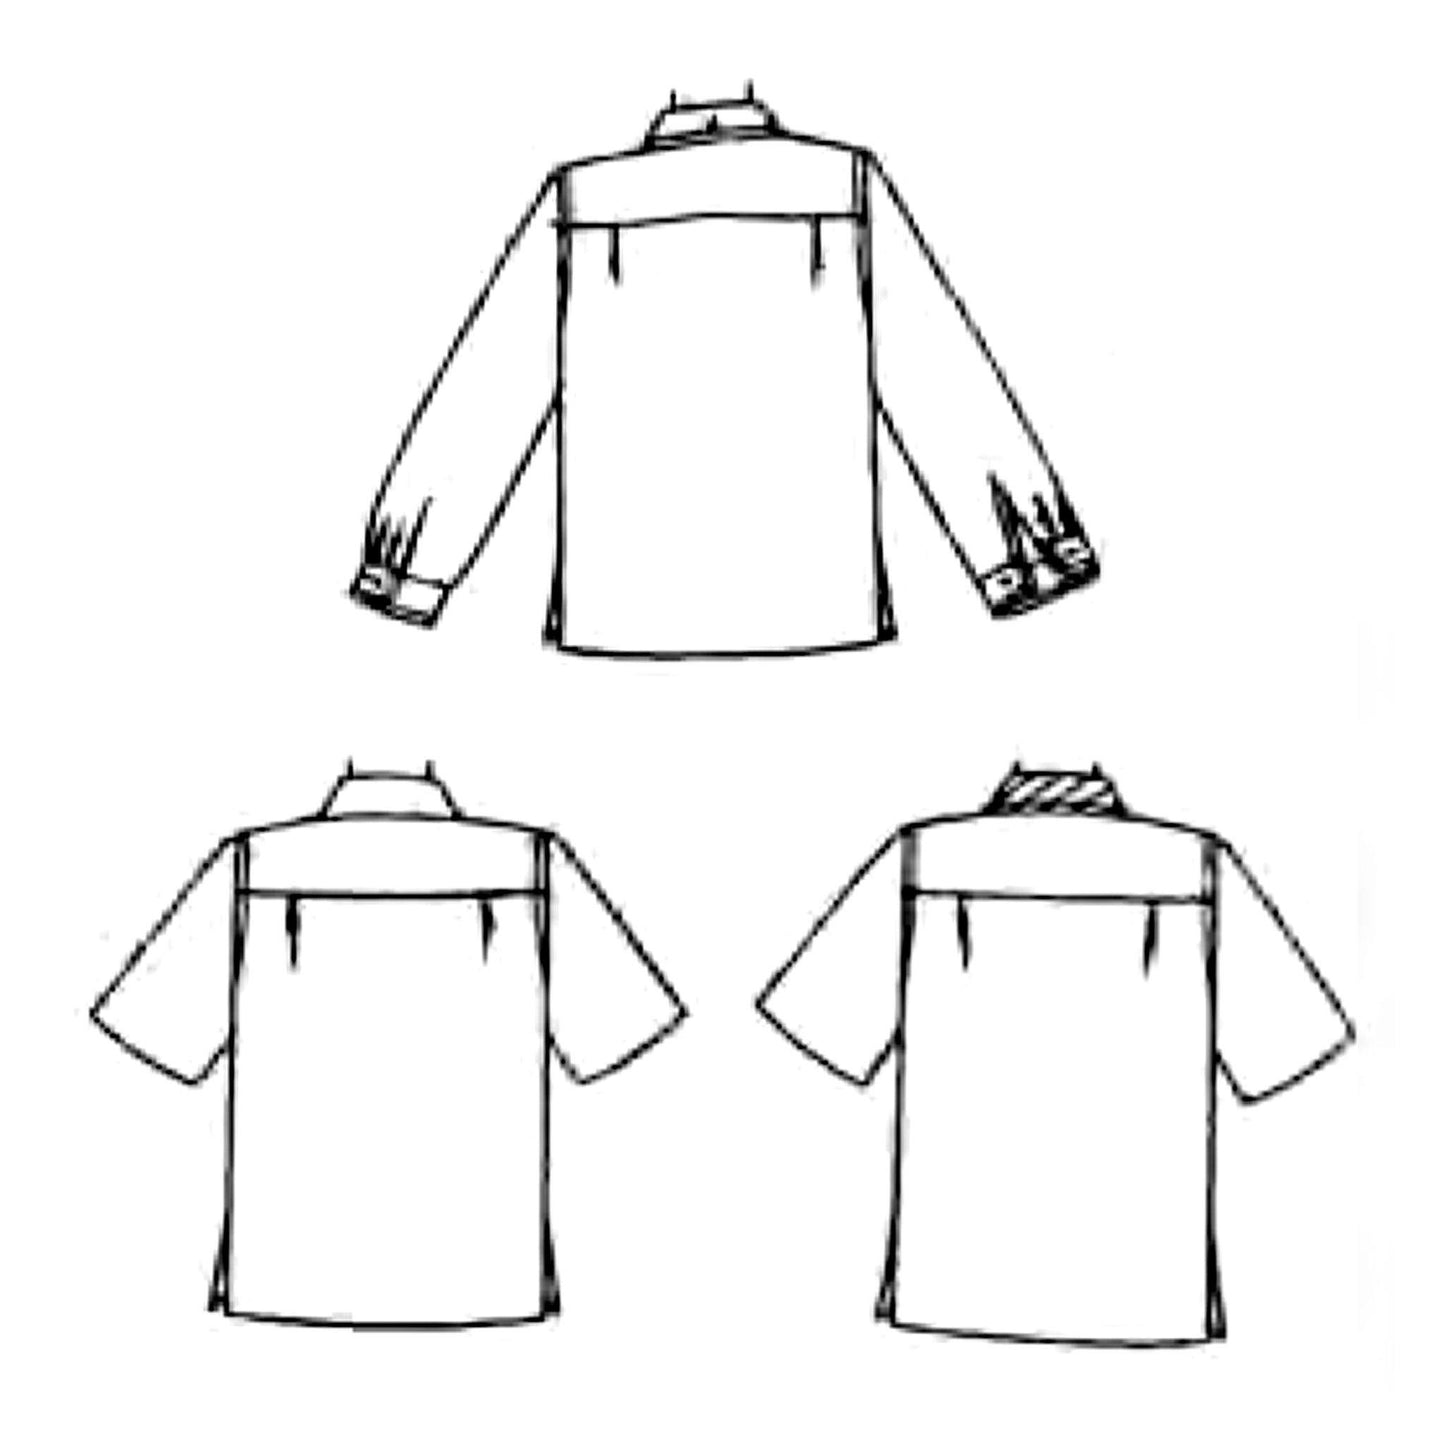 1950s Pattern, Men's Set of Sports Shirt - Line drawing of back views